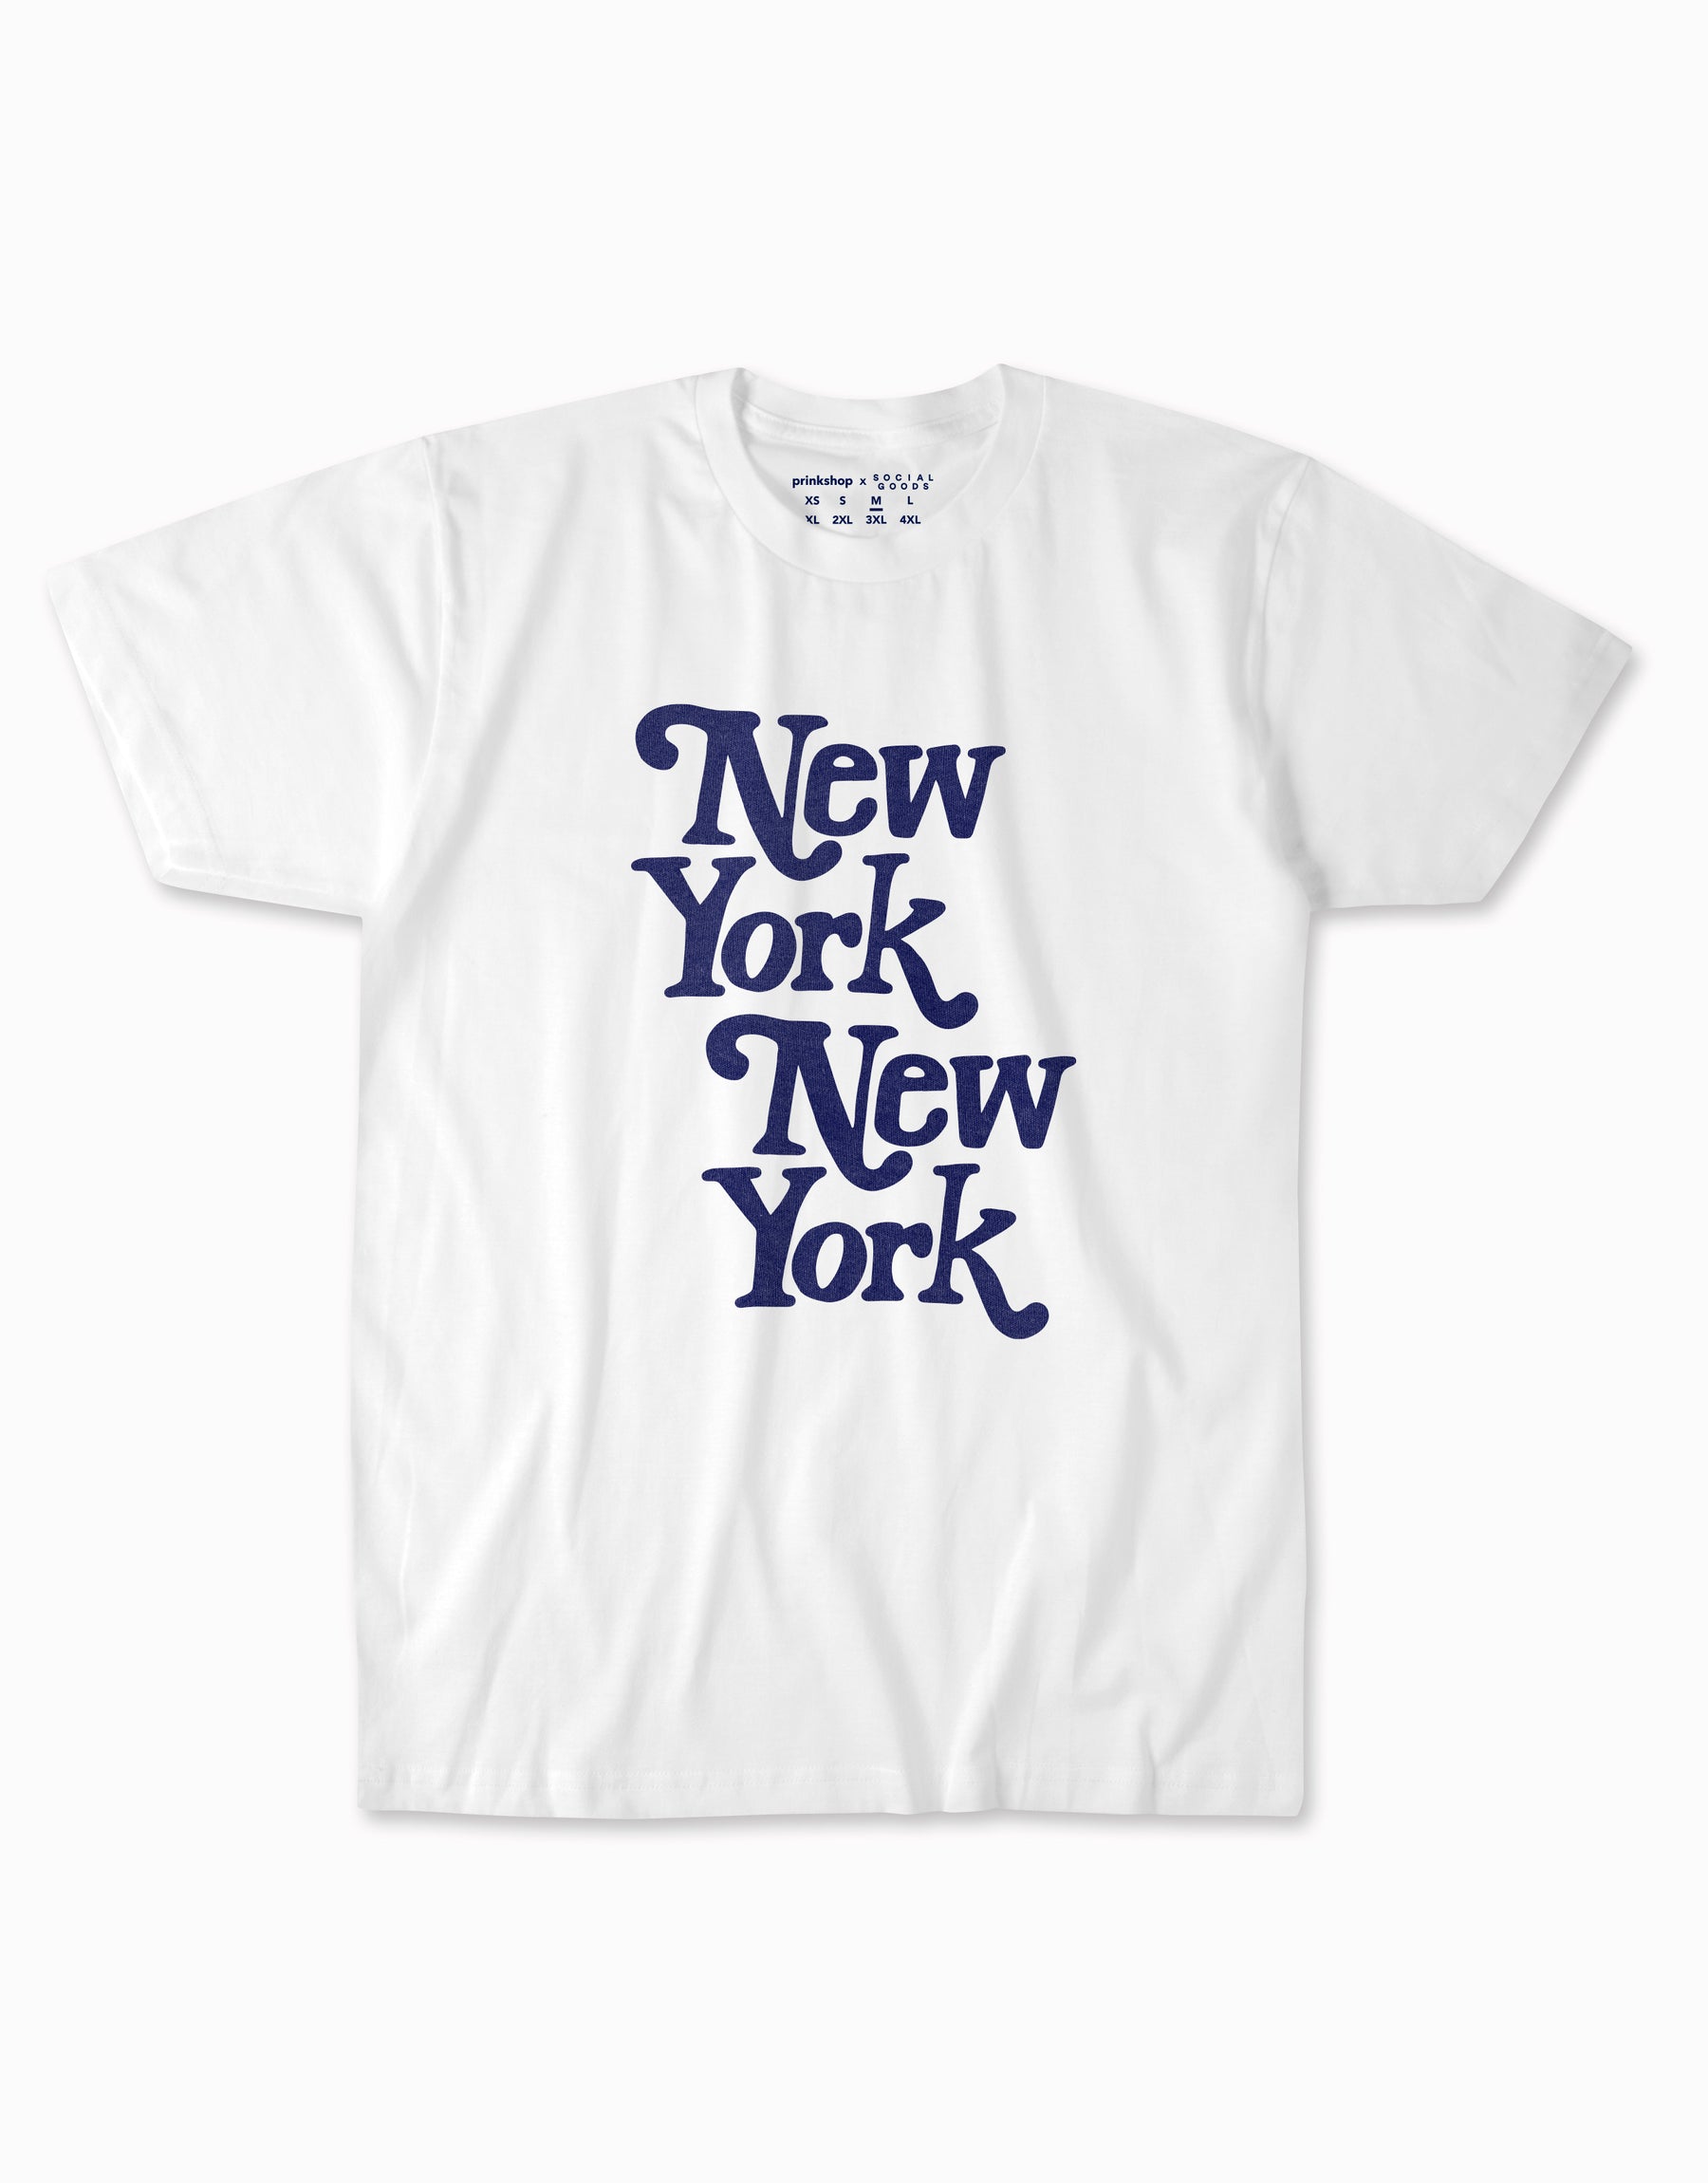 New York, New York Tee - White/Blue